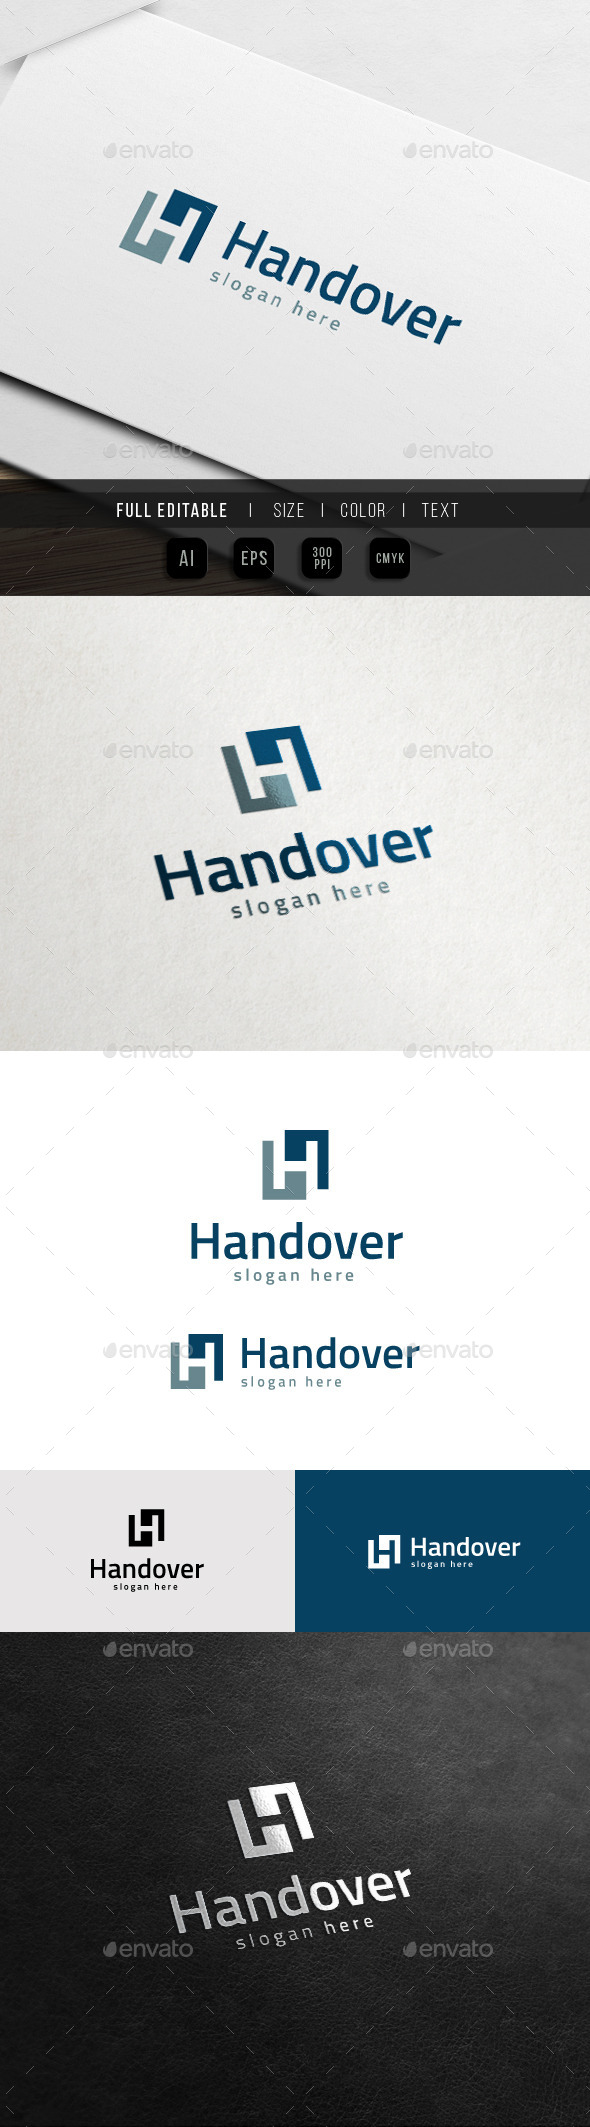 Hand Over Marketing - Square Finance Logo